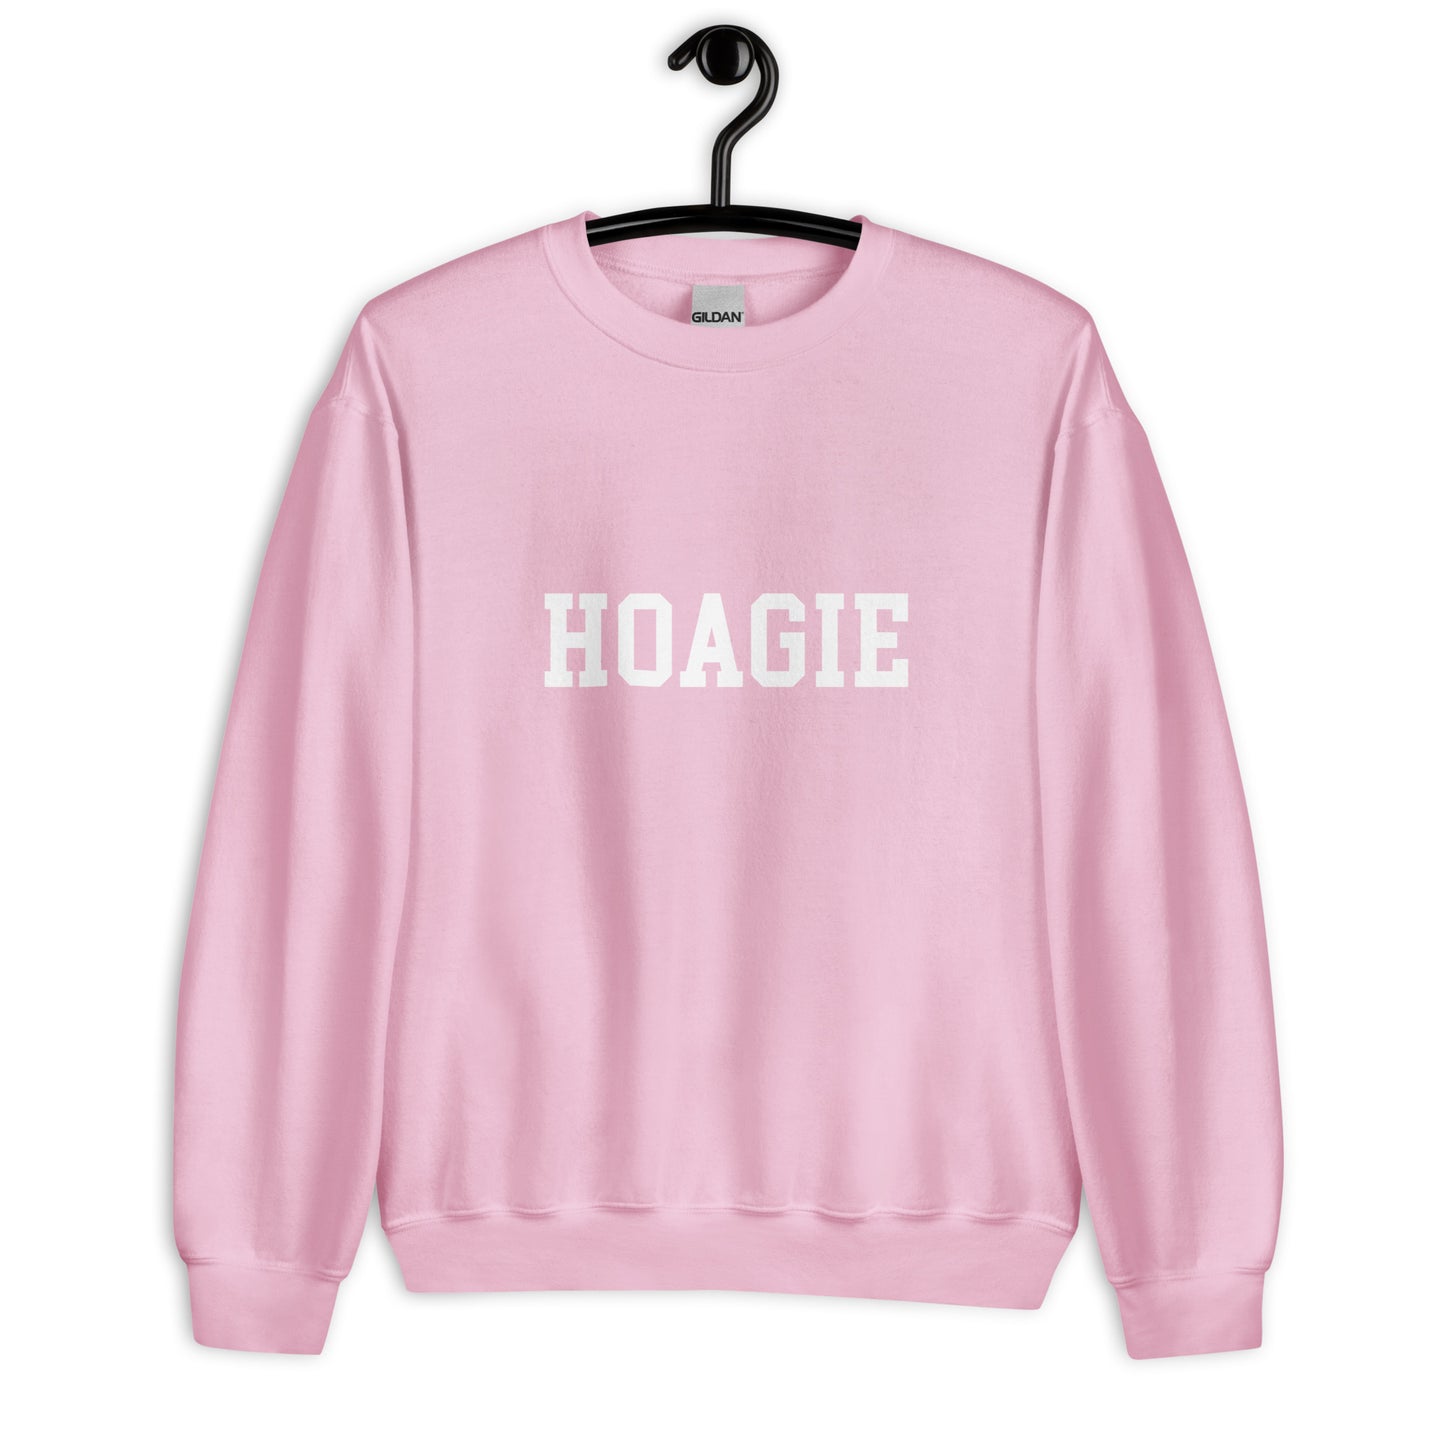 Hoagie Sweatshirt - Straight Font